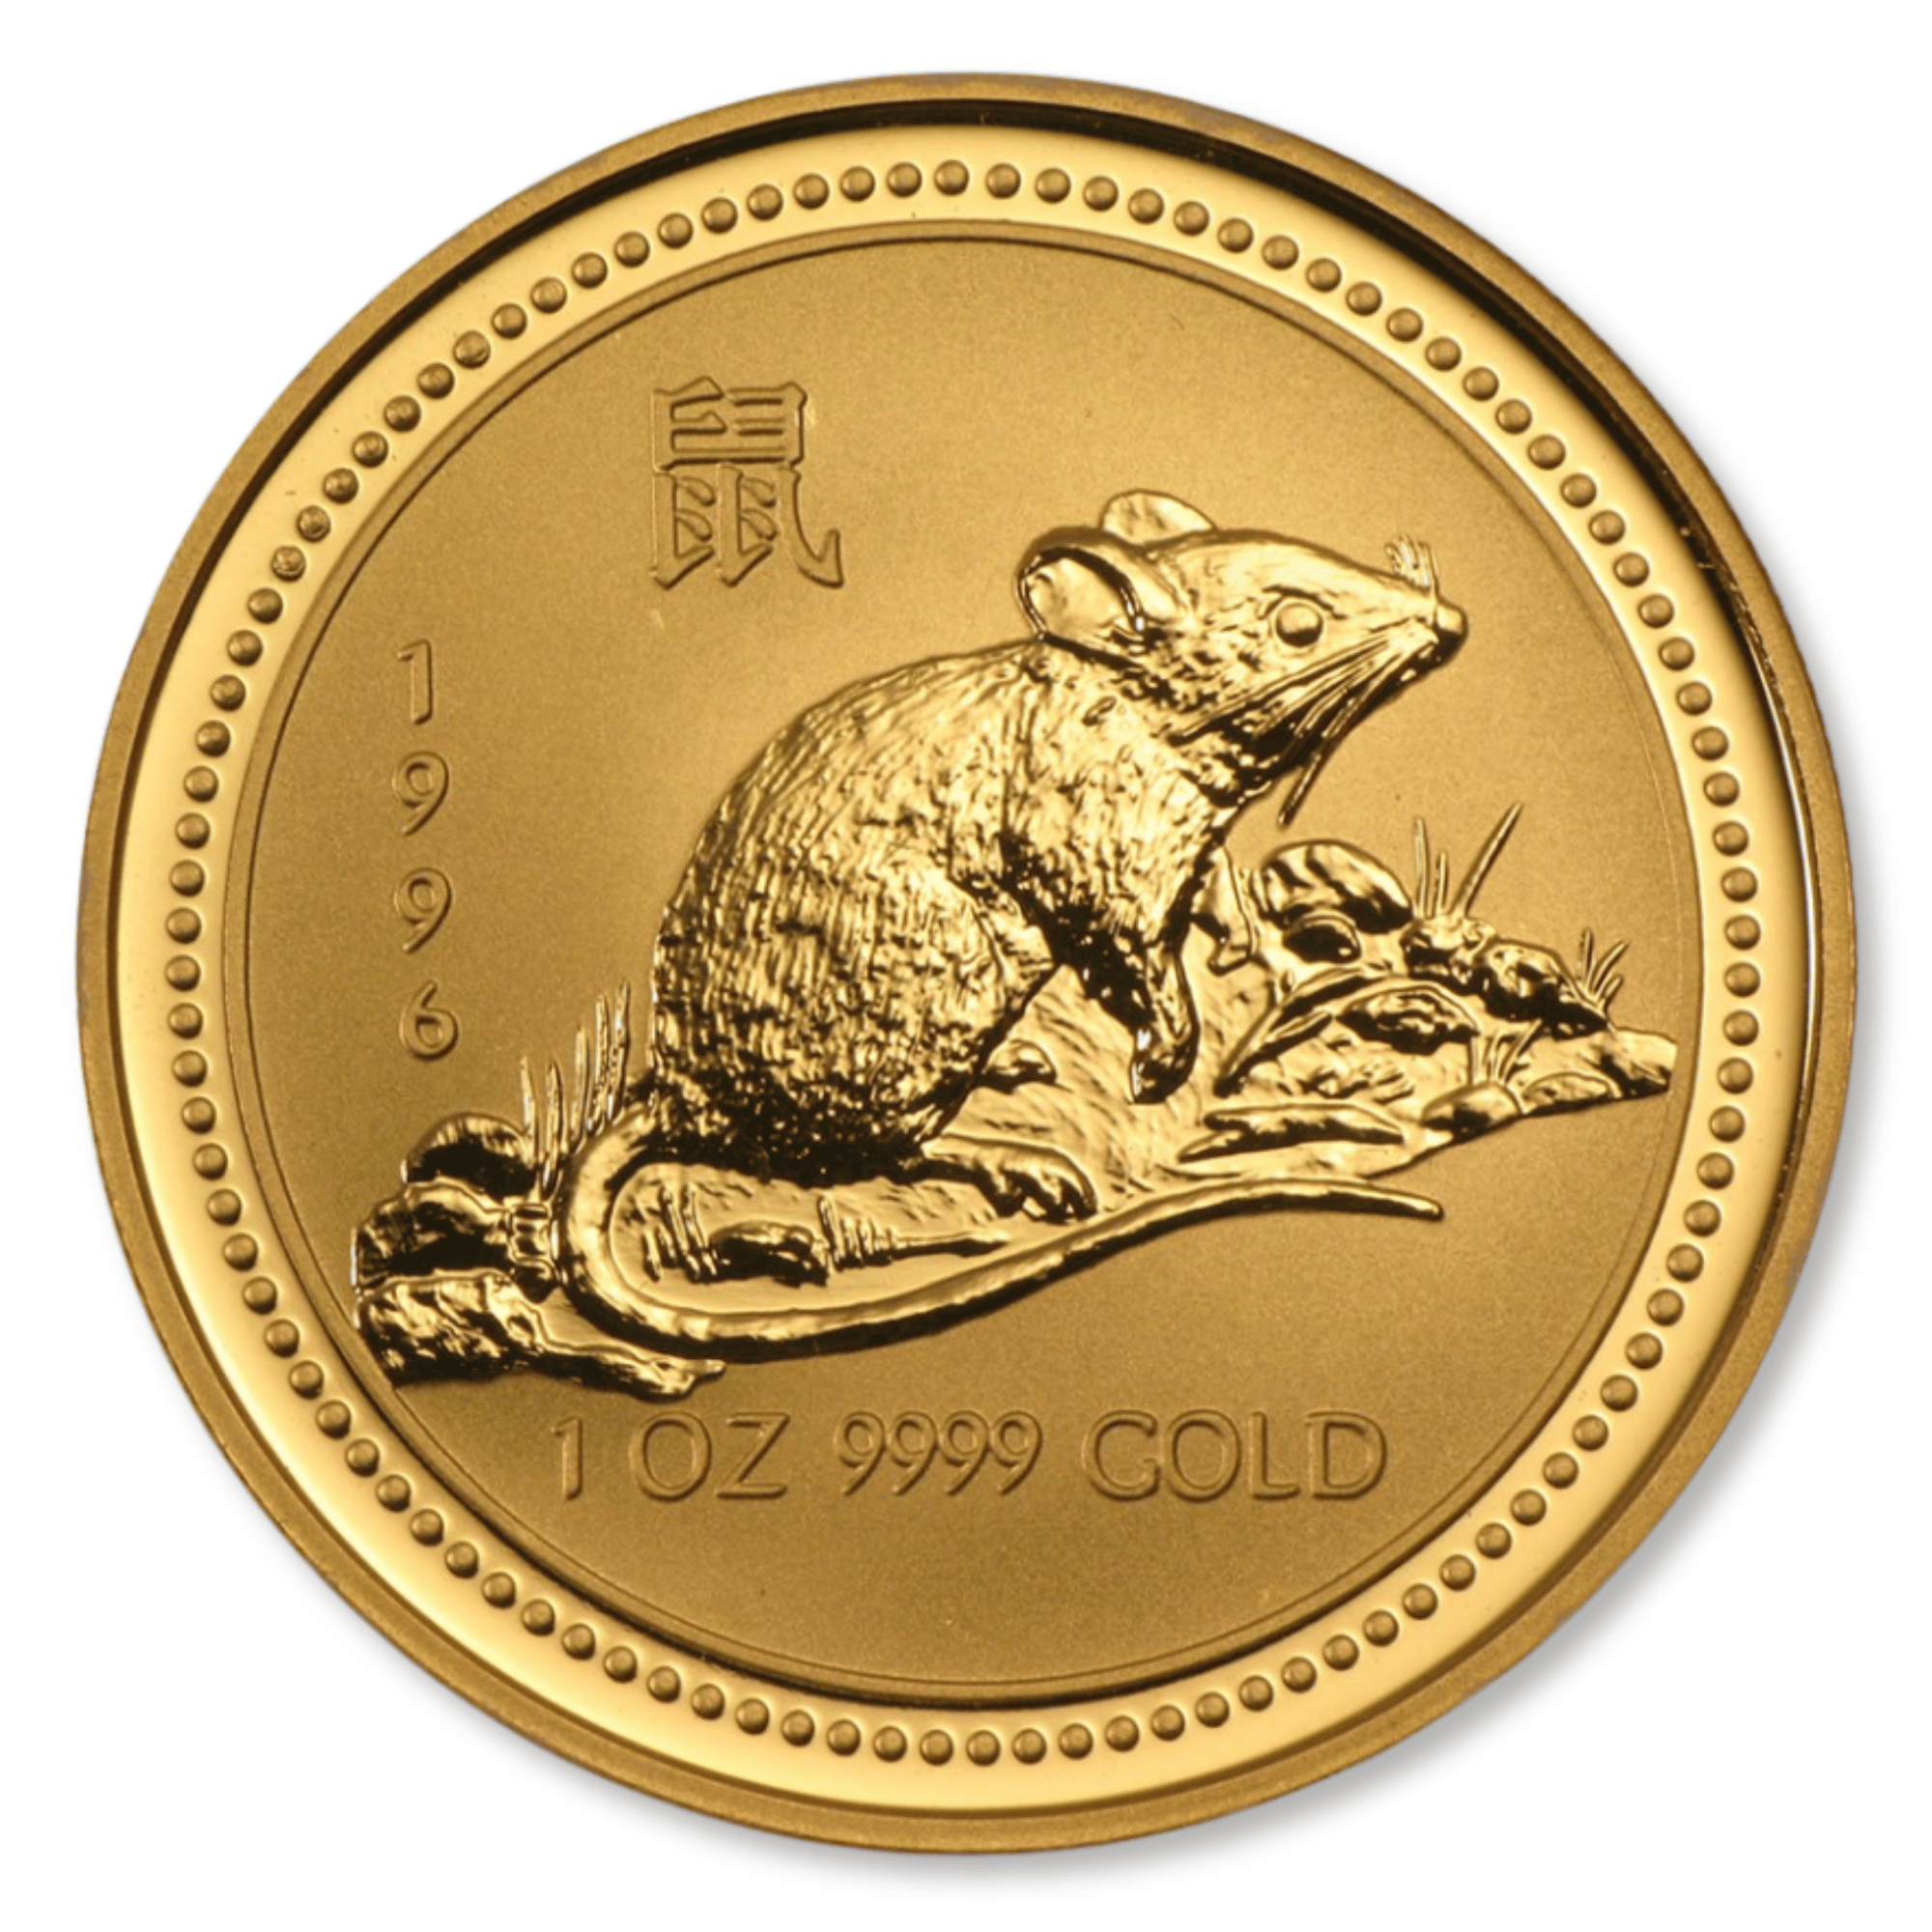 1996 1oz Perth Mint Gold Lunar Rat Coin Series 1